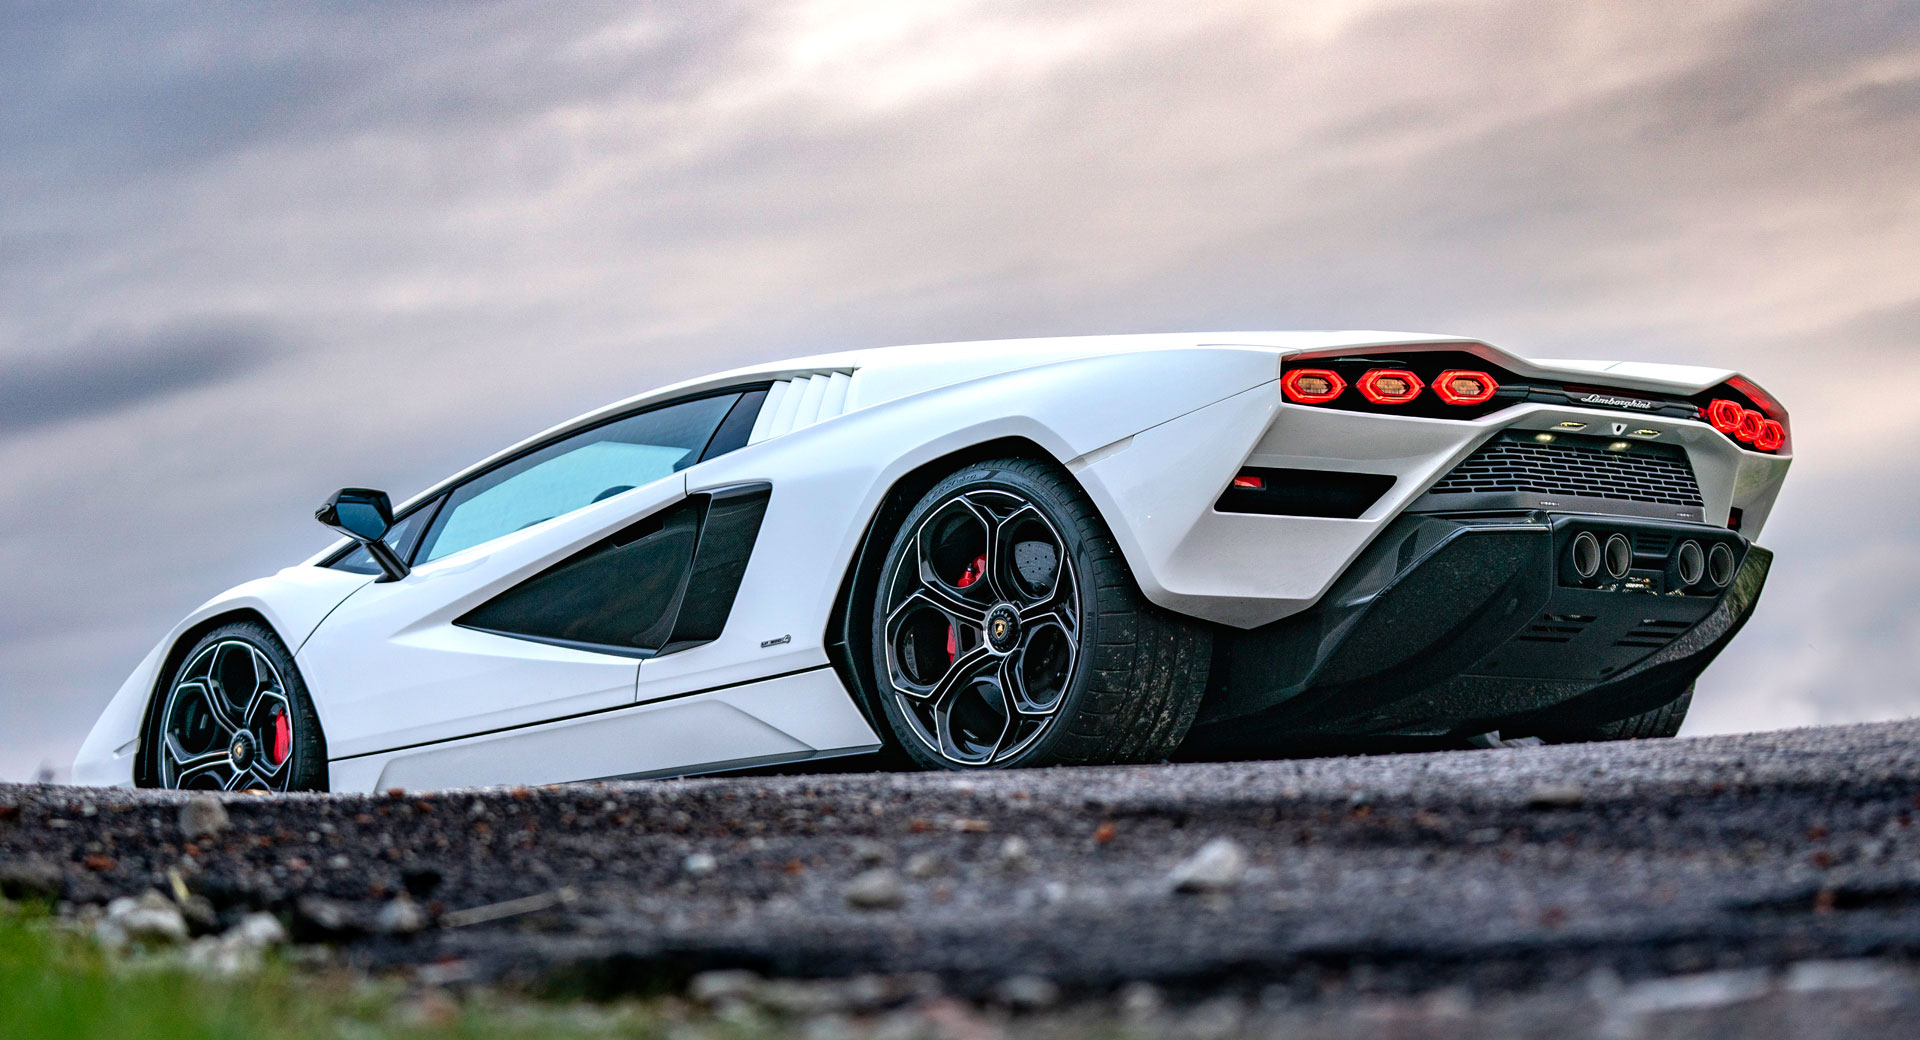 Lamborghini sells out combustion engine models, WELT reports